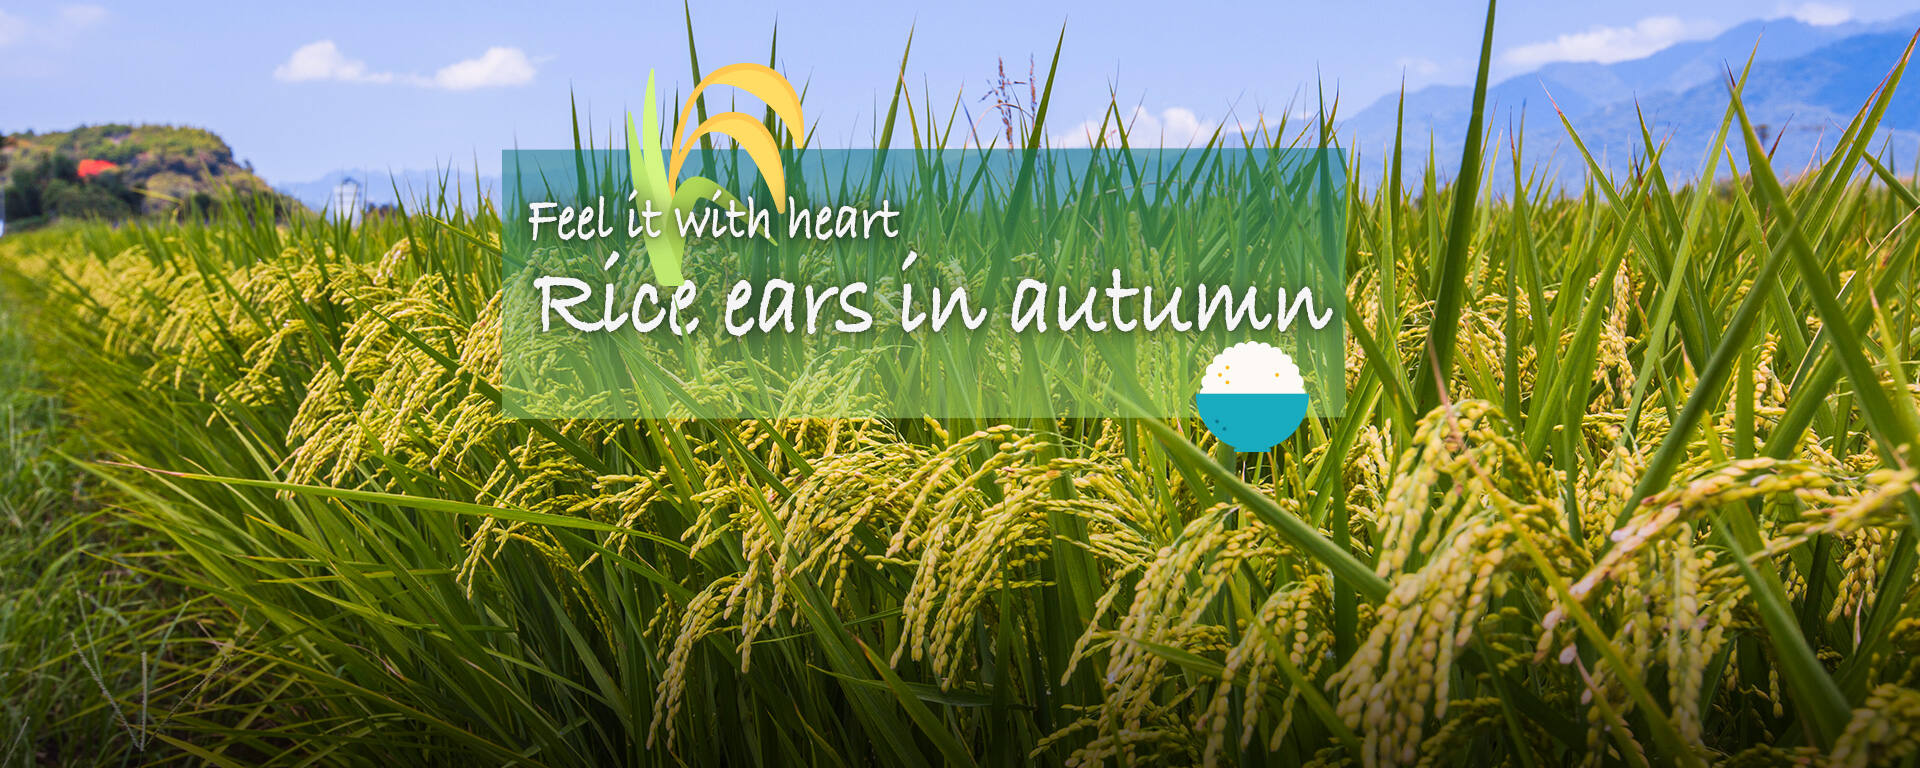 Rice ears in autumn